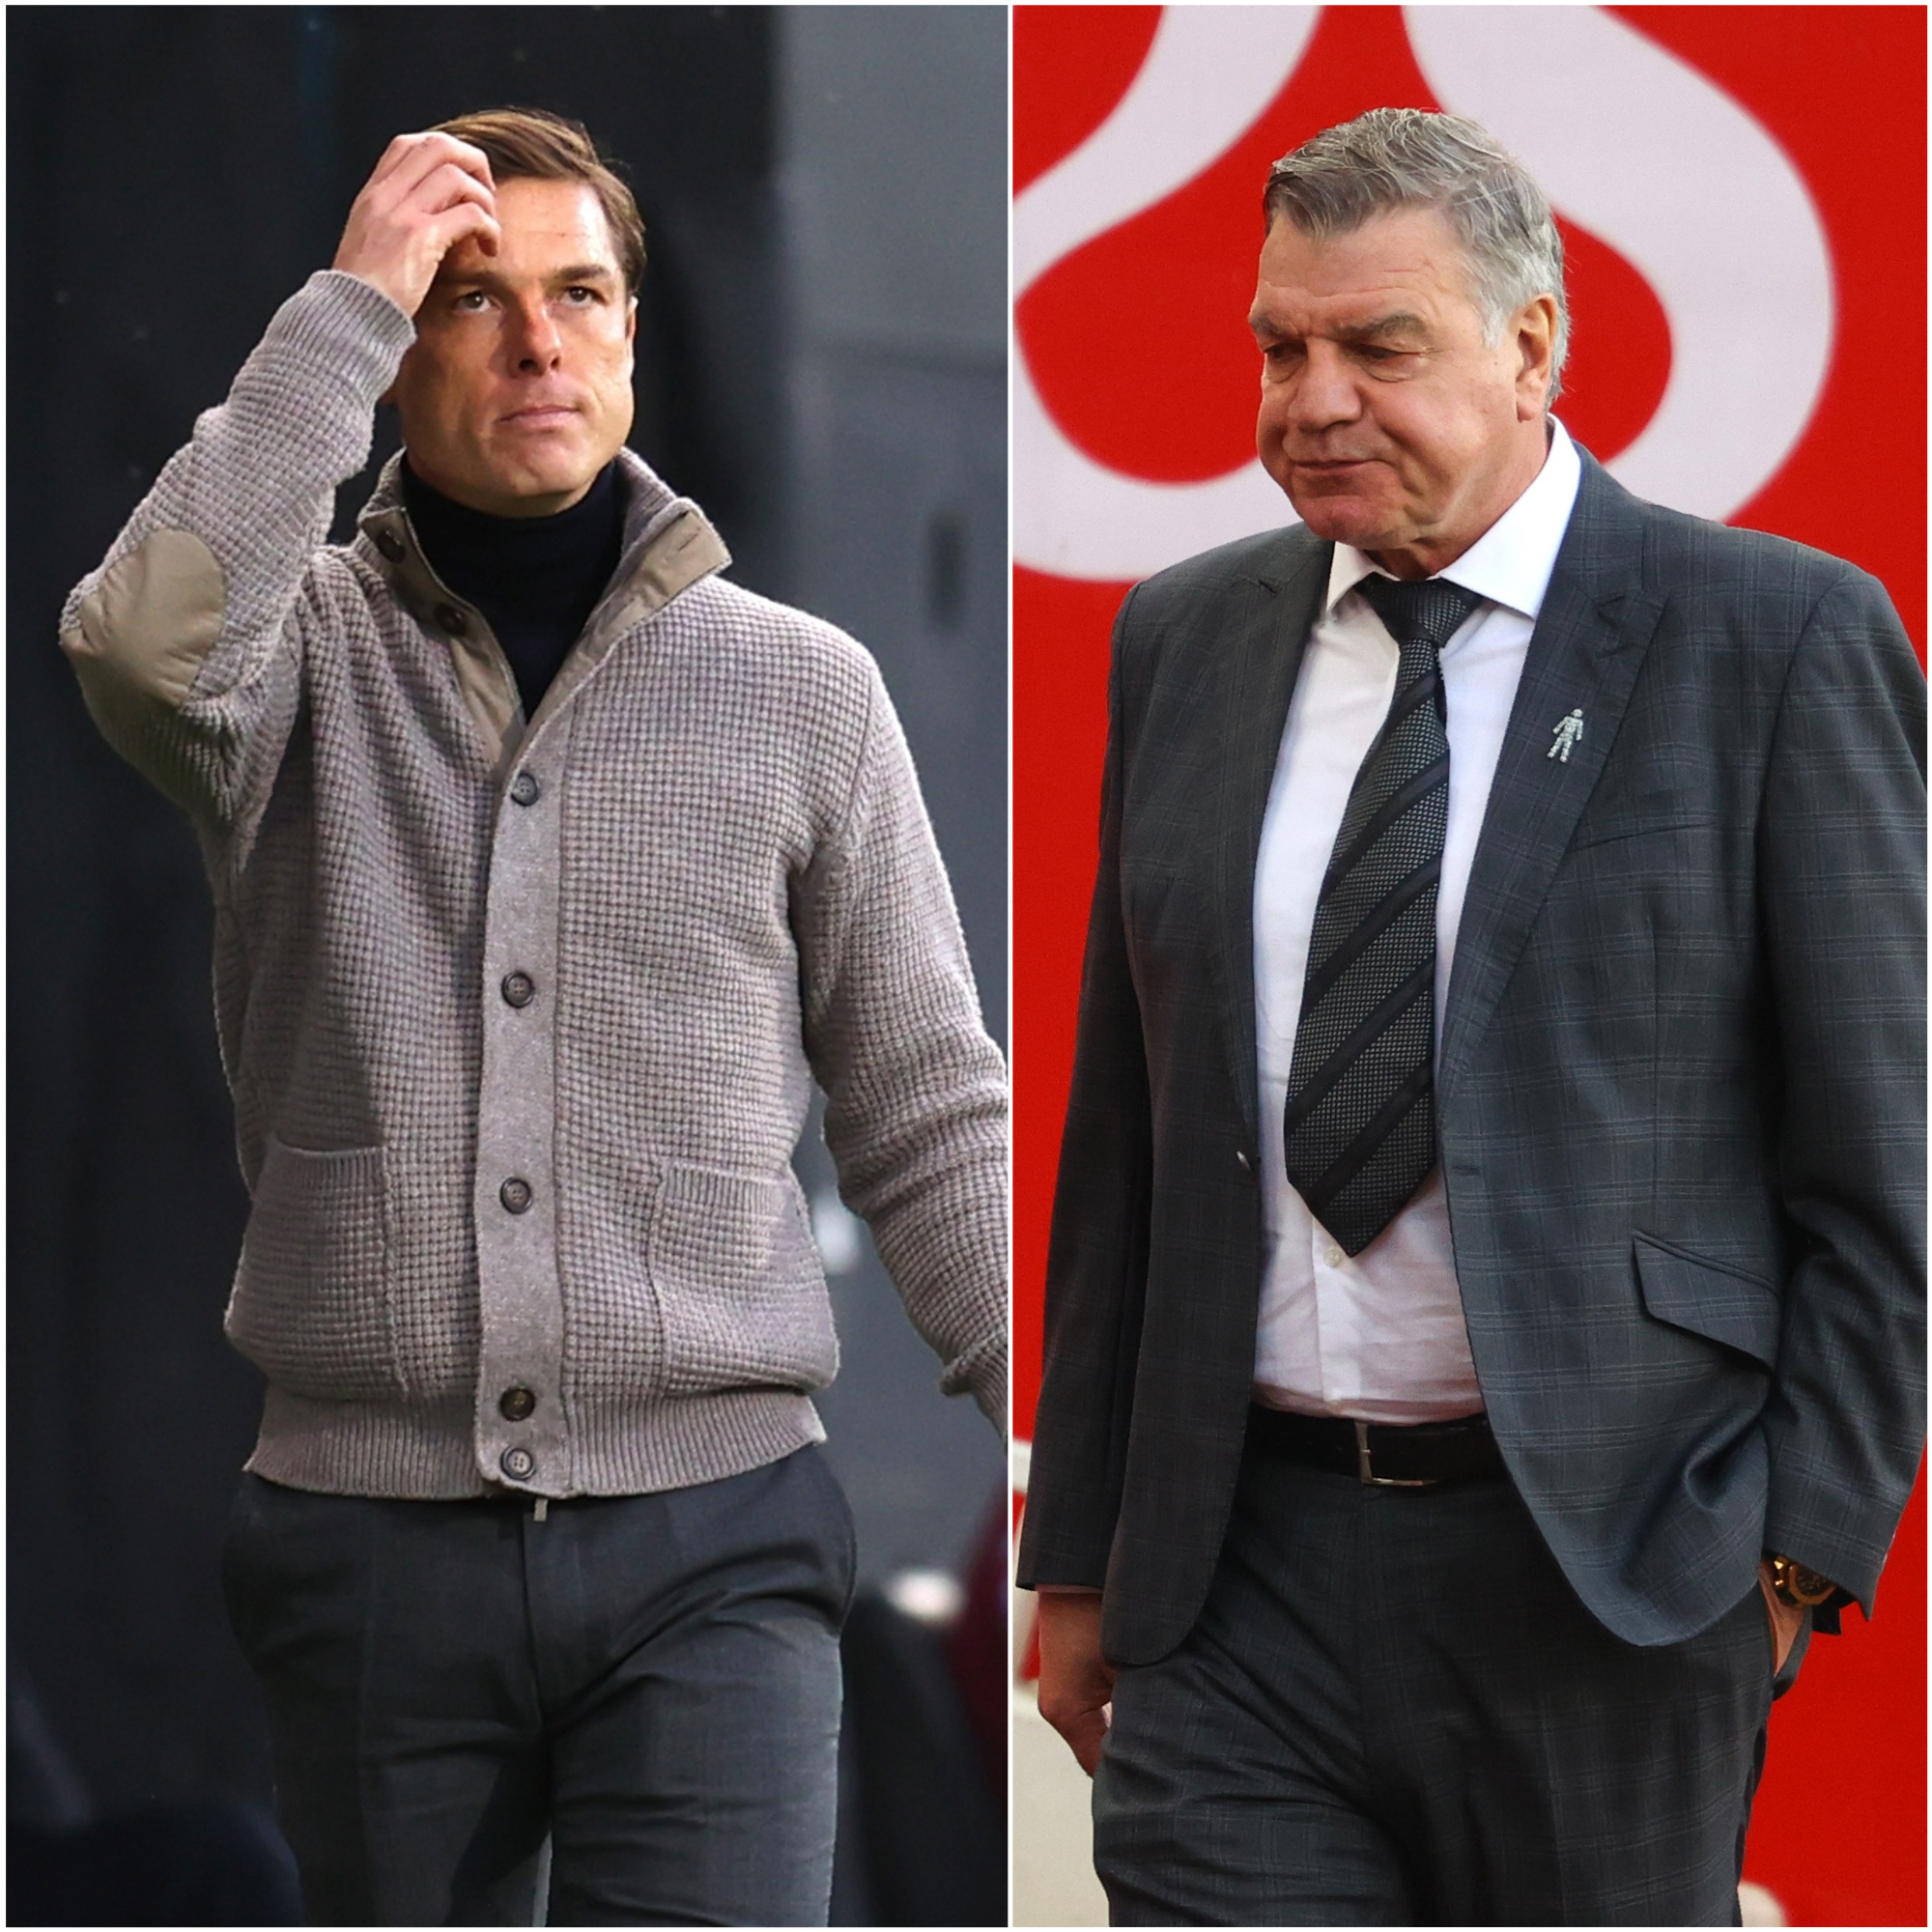 Fulham manager Scott Parker, left, and West Brom's Sam Allardyce